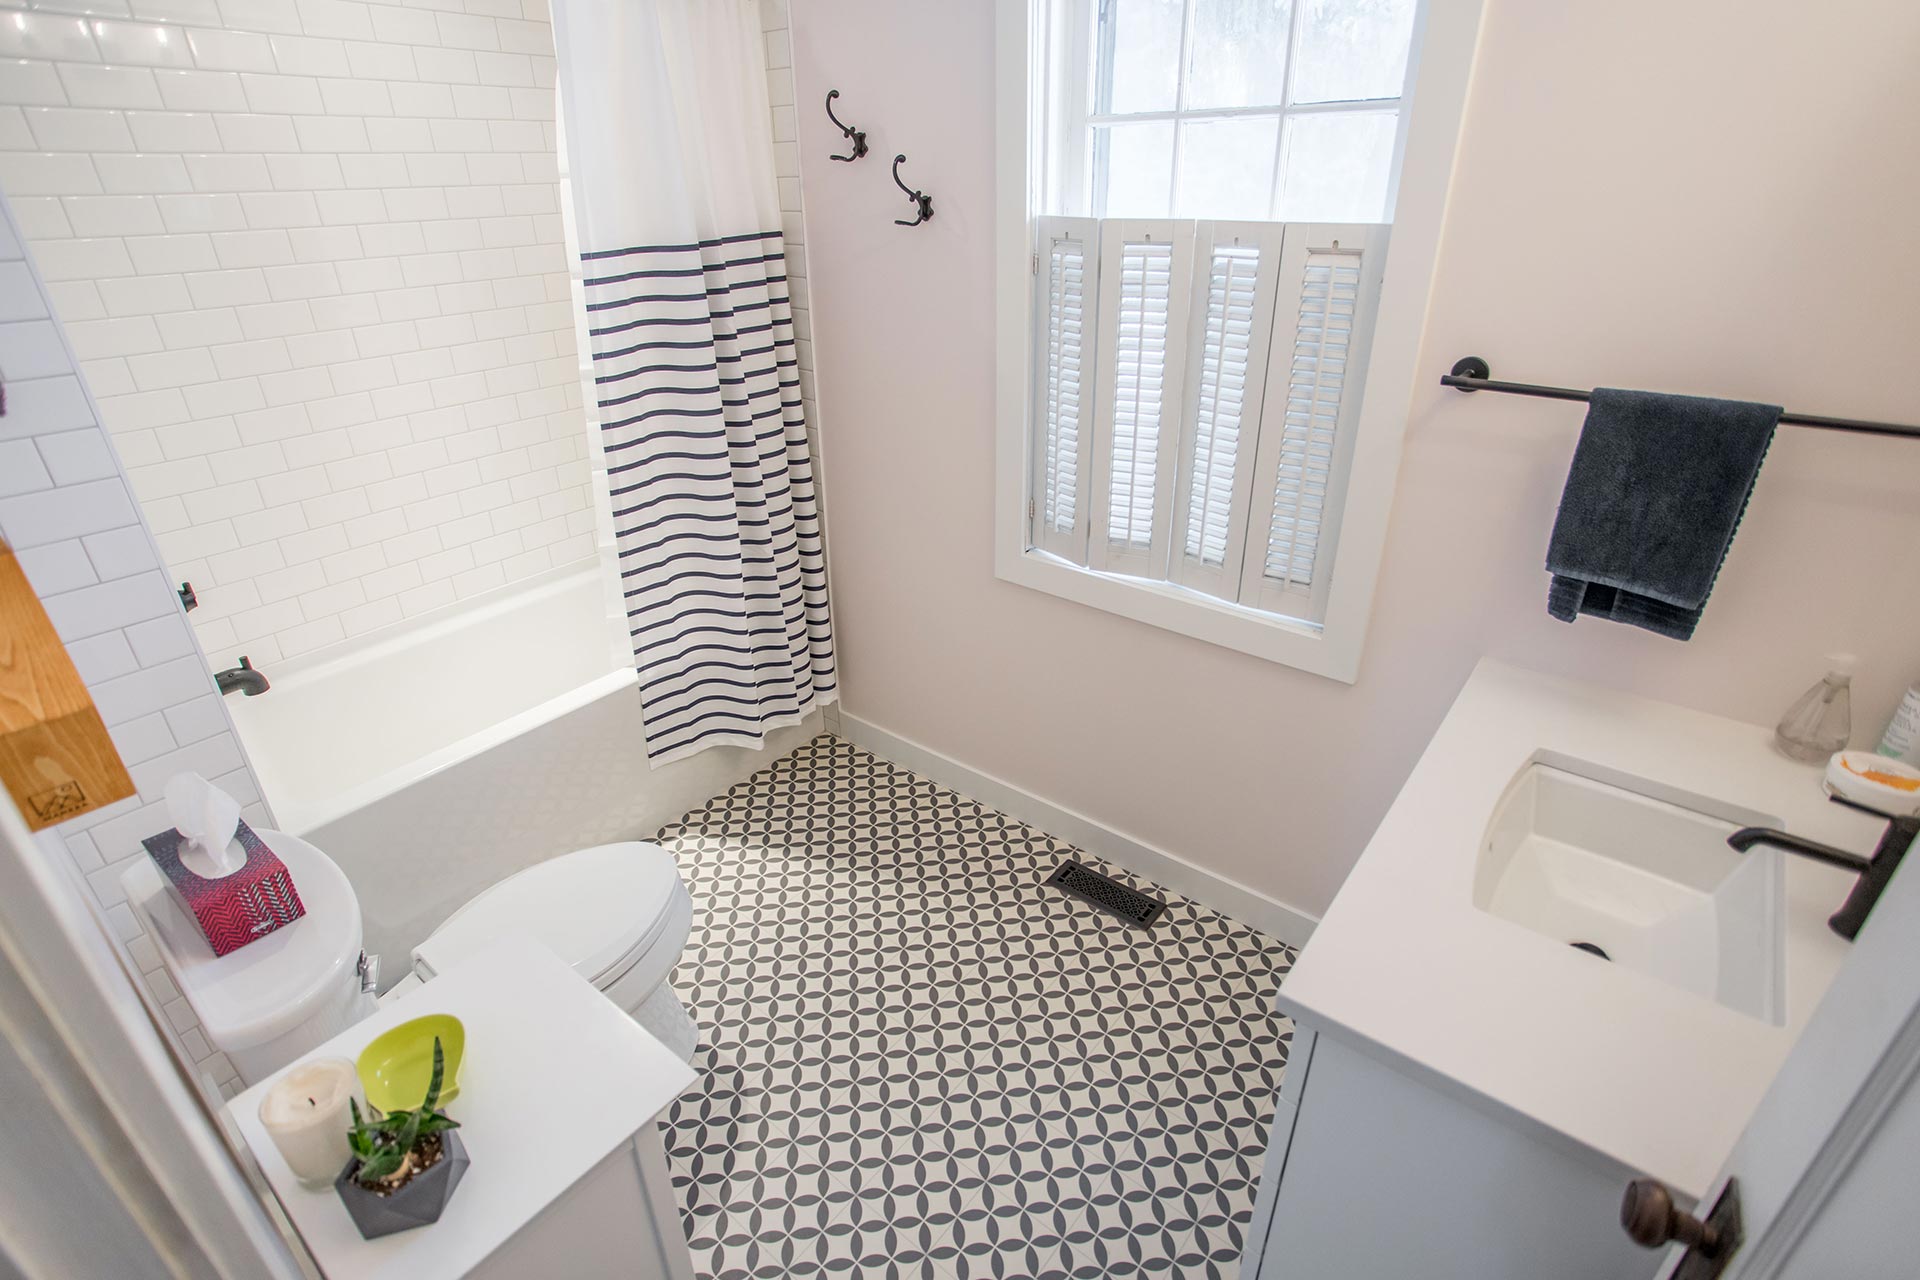 Belamour Homes - Angus Street Kitchen and Bathroom Renovation - Full Bathroom